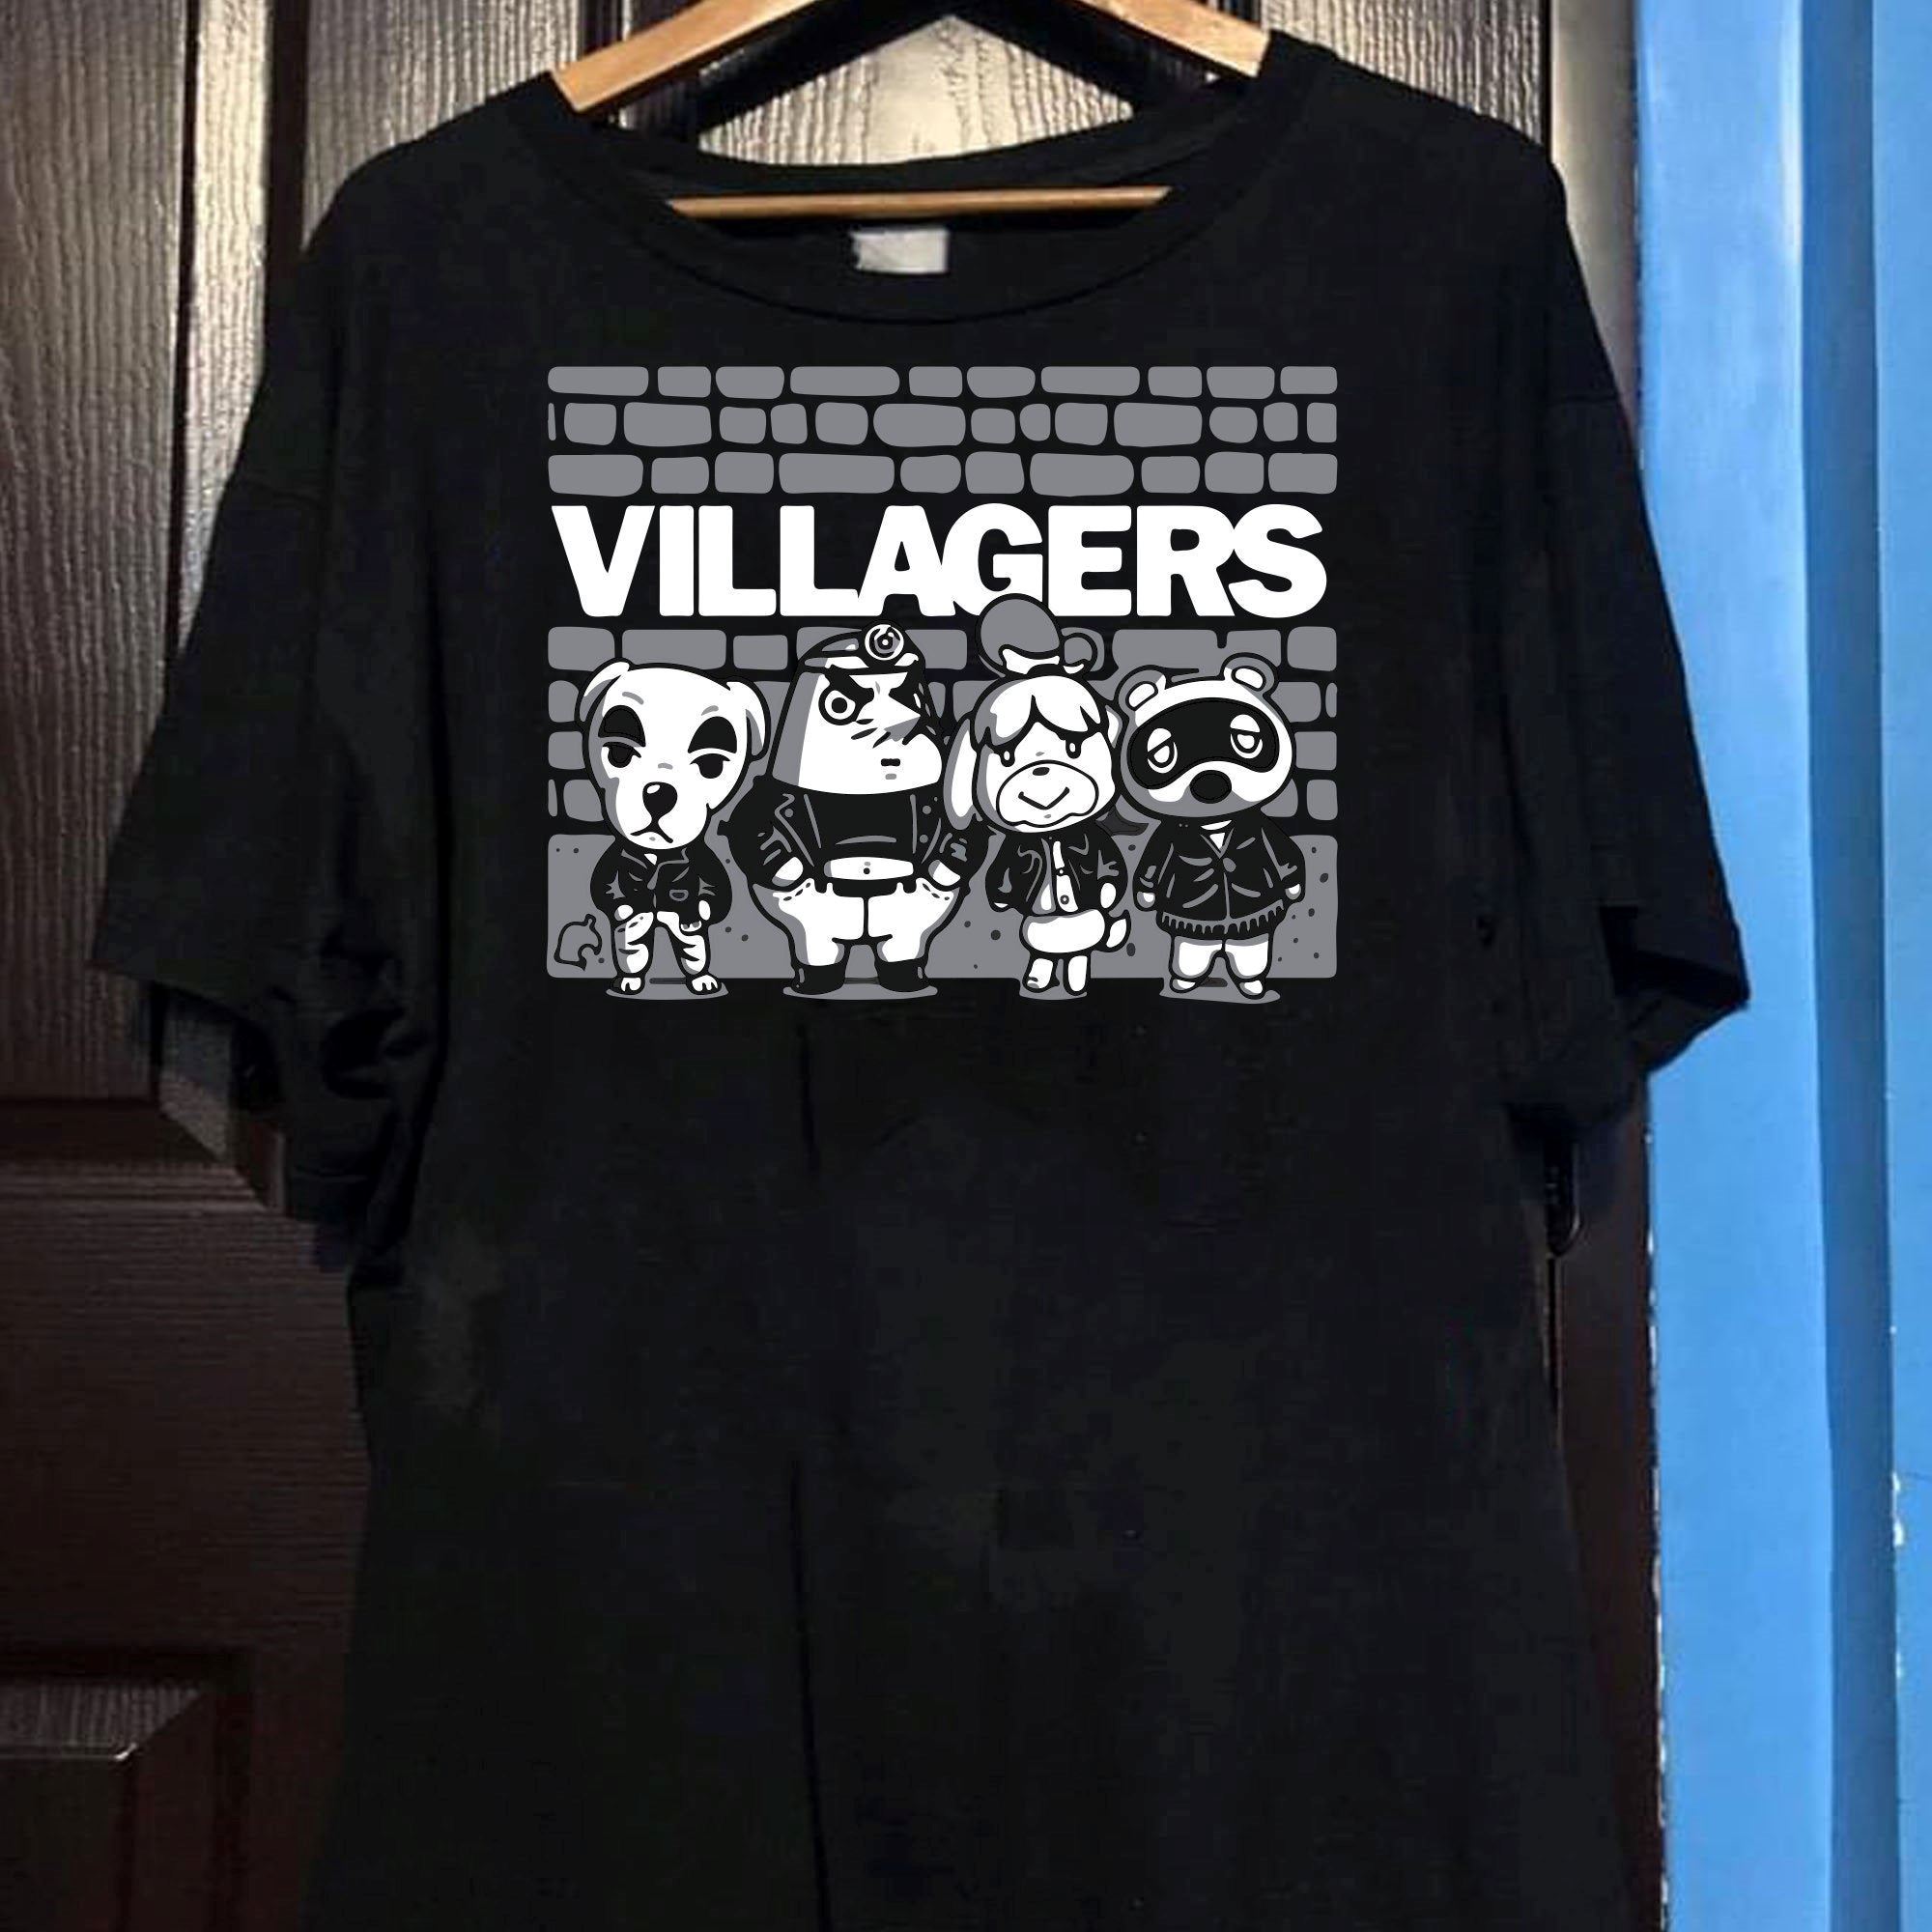 Awesome Villagers Shirt - Animal Crossing Tee Shirts Printed Art Shirt Gift For Men Women Unisex T Shirt 